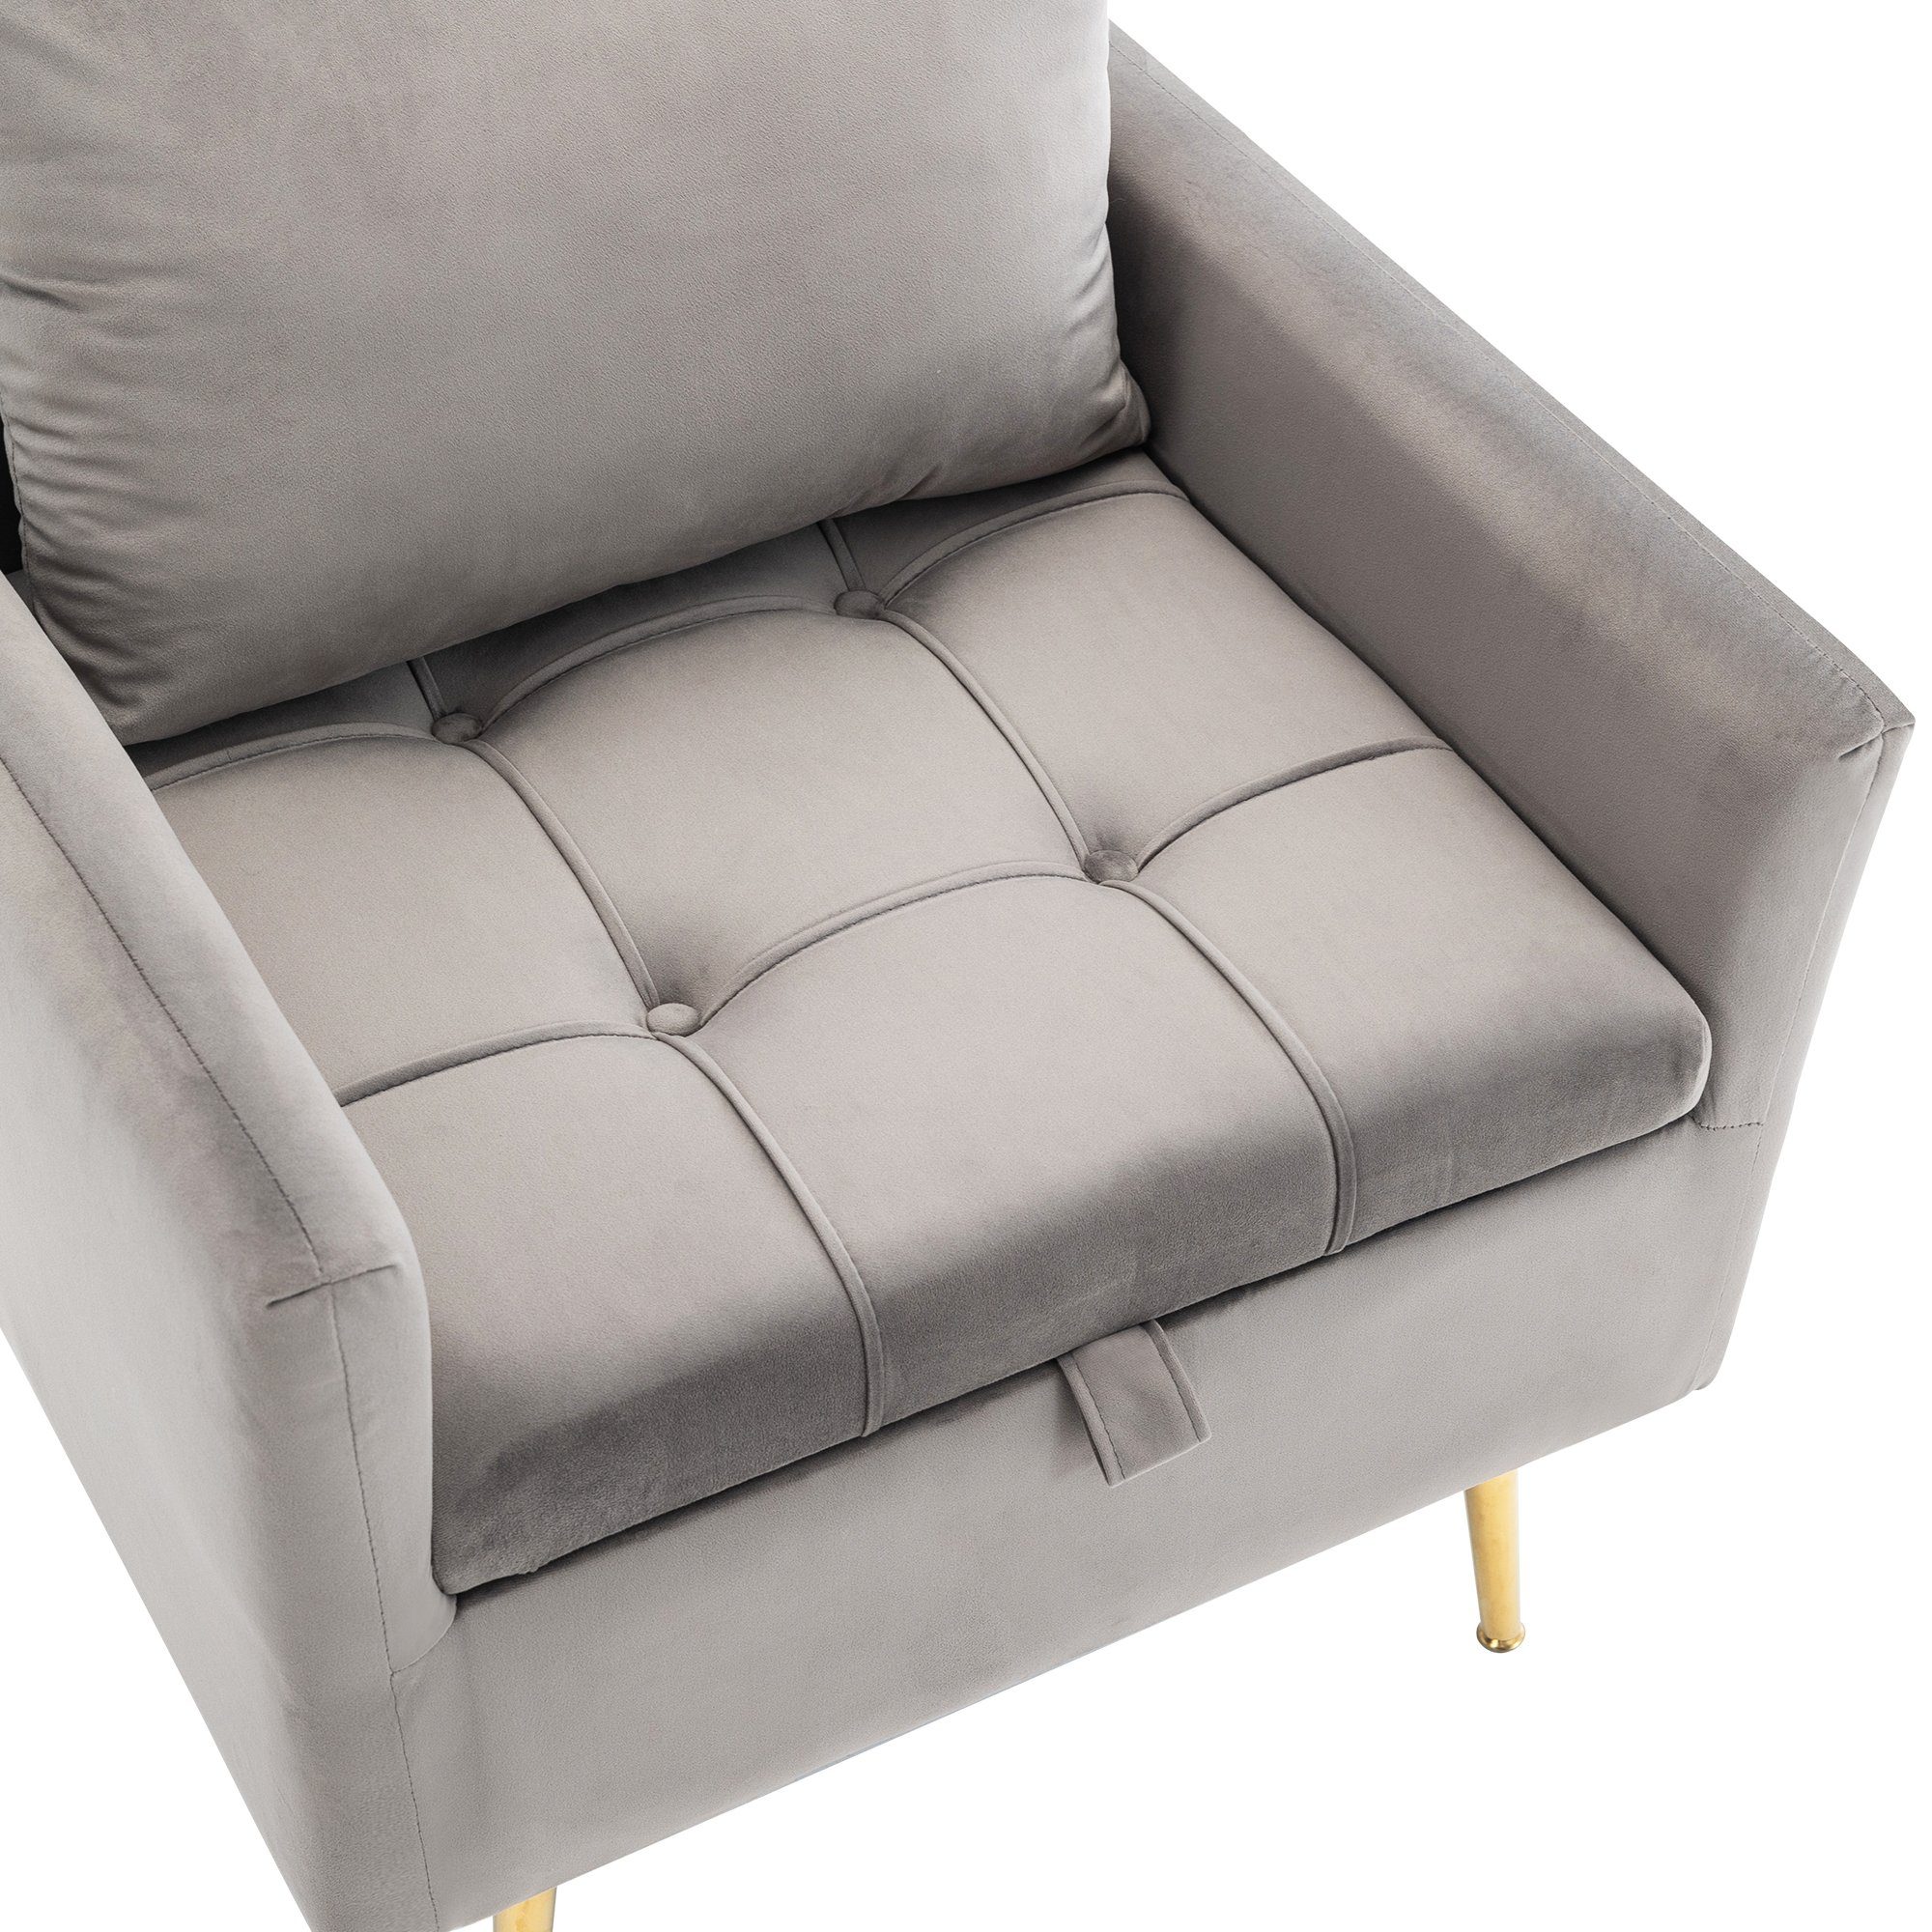 Moderner lässiger grau mit Sessel OKWISH Einzelsessel, Polstersessel, (Sessel Metallbeinen), Loungesessel, Samtstuhl, Sessel Kissen, mit roségoldenen Fernsehsessel